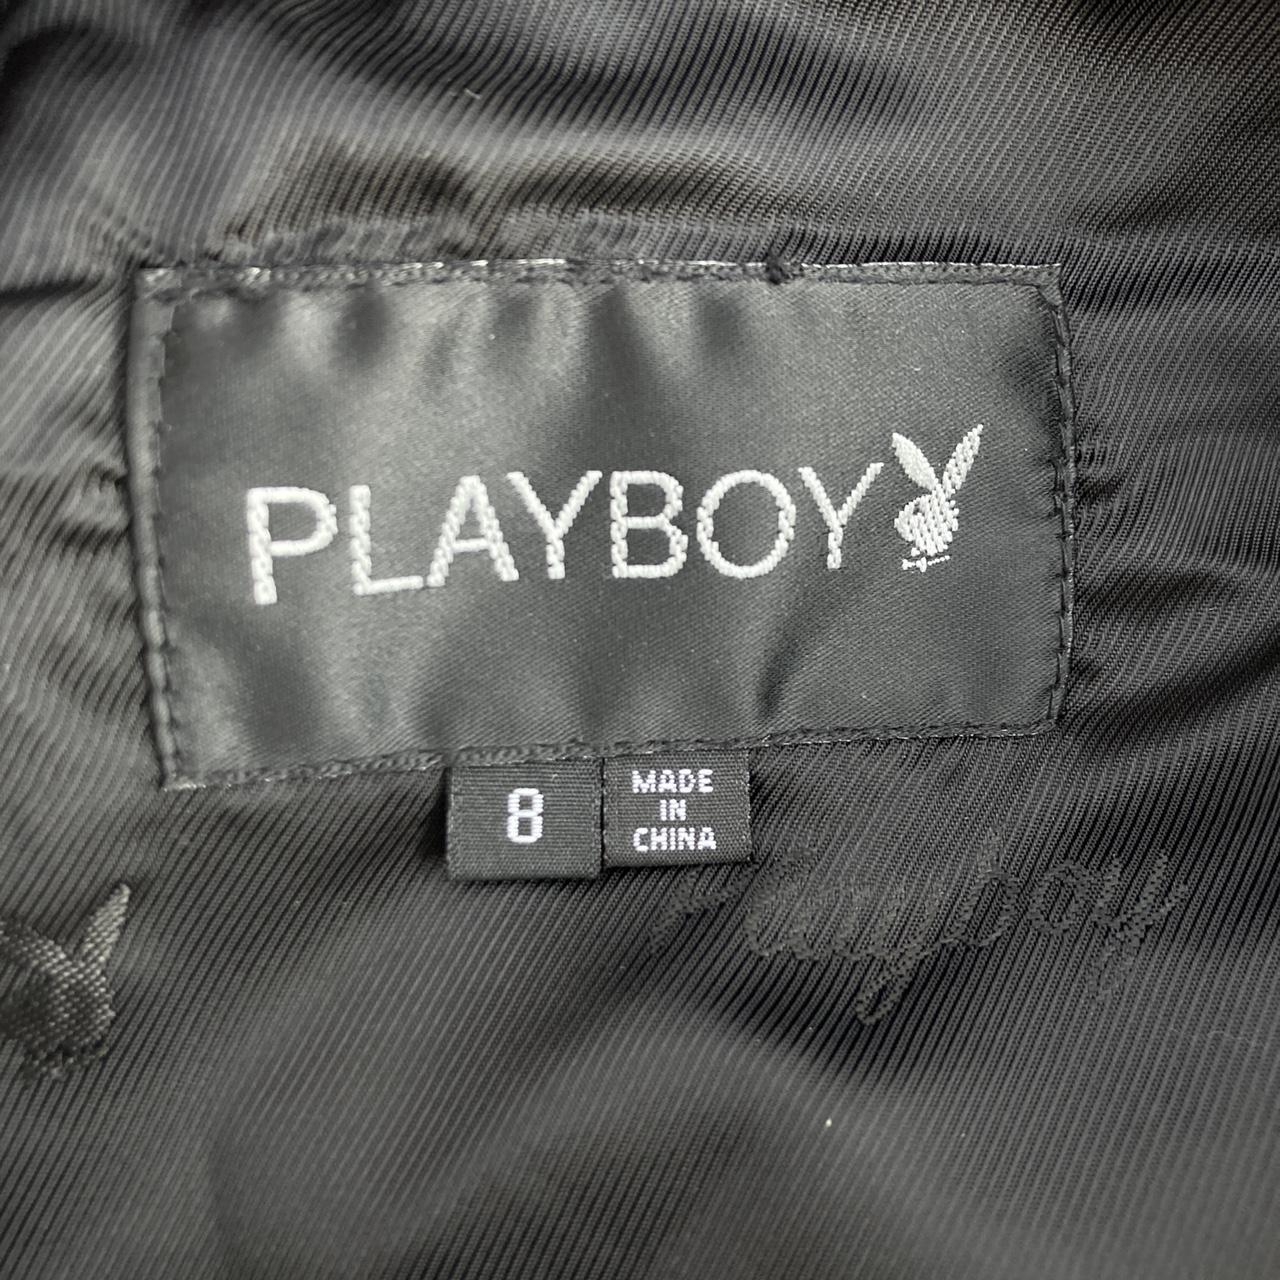 Product Image 4 - Playboy black and white skirt